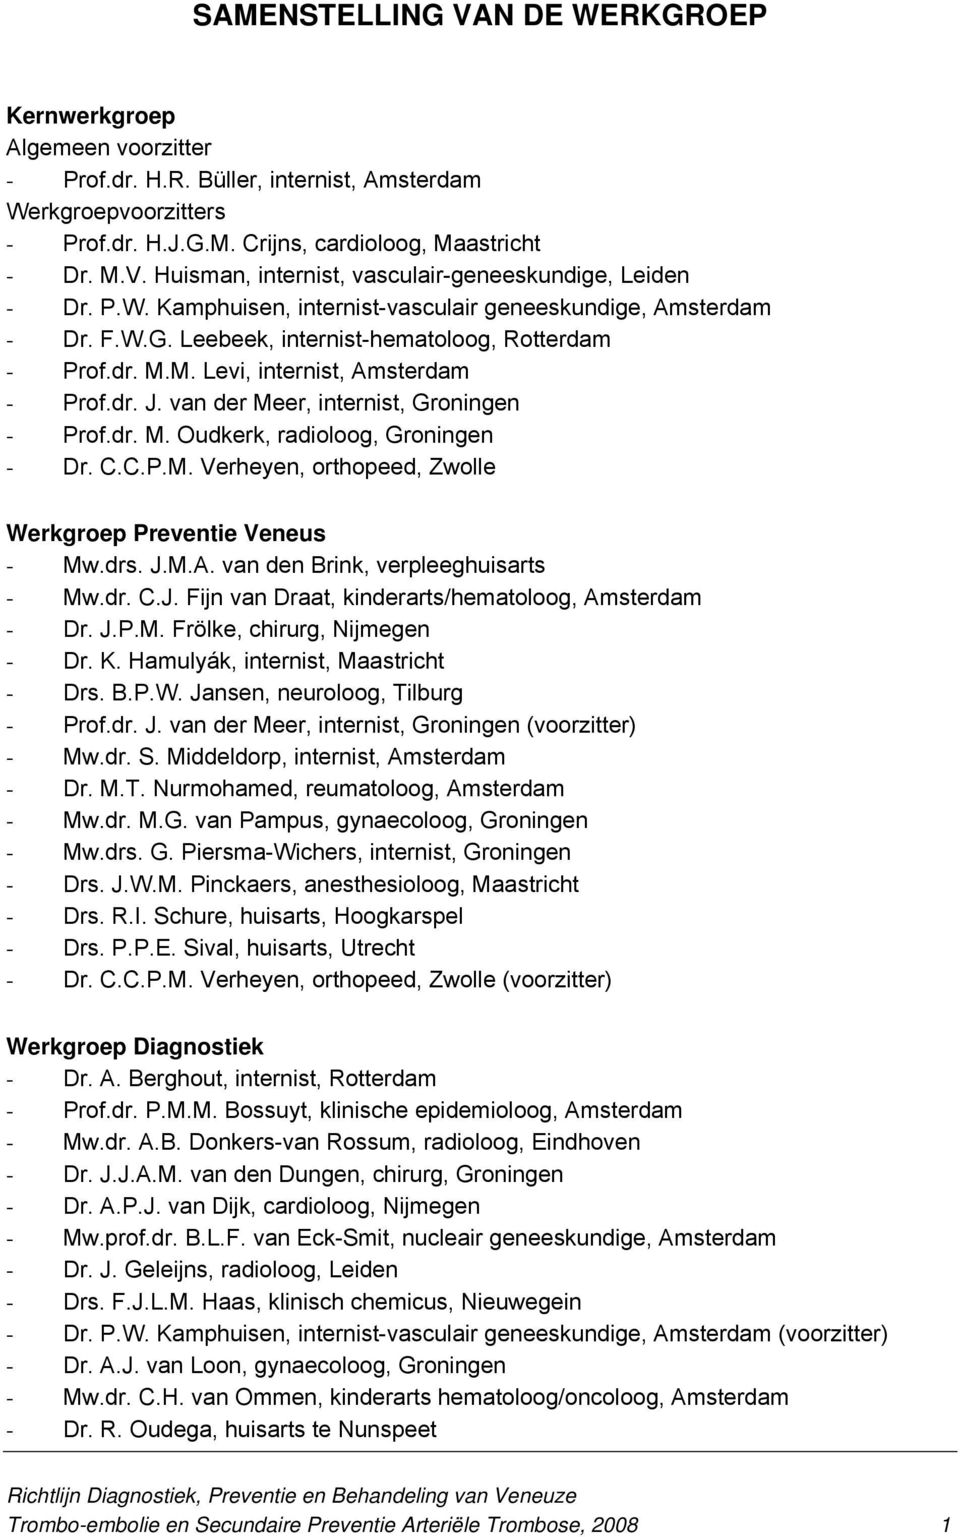 van der Meer, internist, Groningen - Prof.dr. M. Oudkerk, radioloog, Groningen - Dr. C.C.P.M. Verheyen, orthopeed, Zwolle Werkgroep Preventie Veneus - Mw.drs. J.M.A.